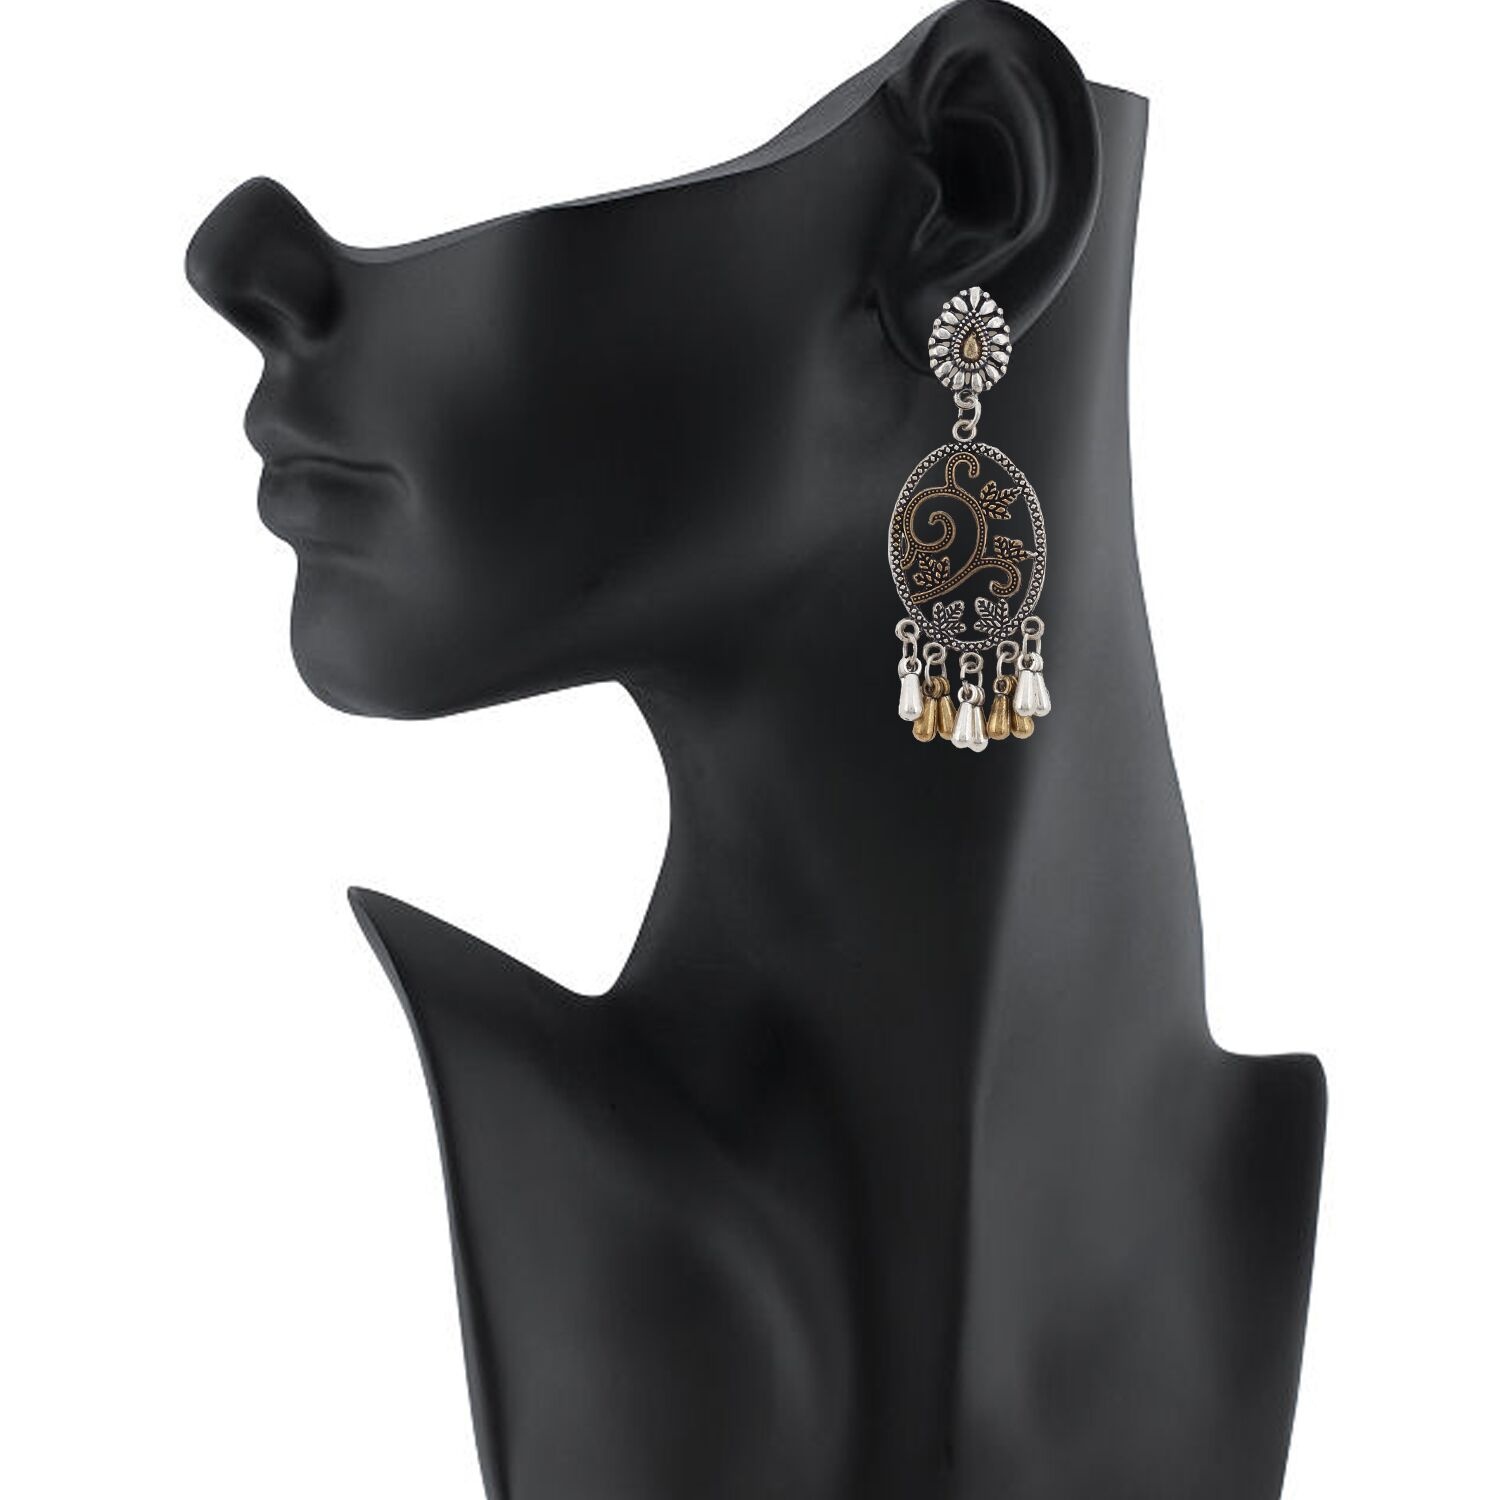 Generic Women's Silver Plated Hook Dangler Hanging Earrings-Gold